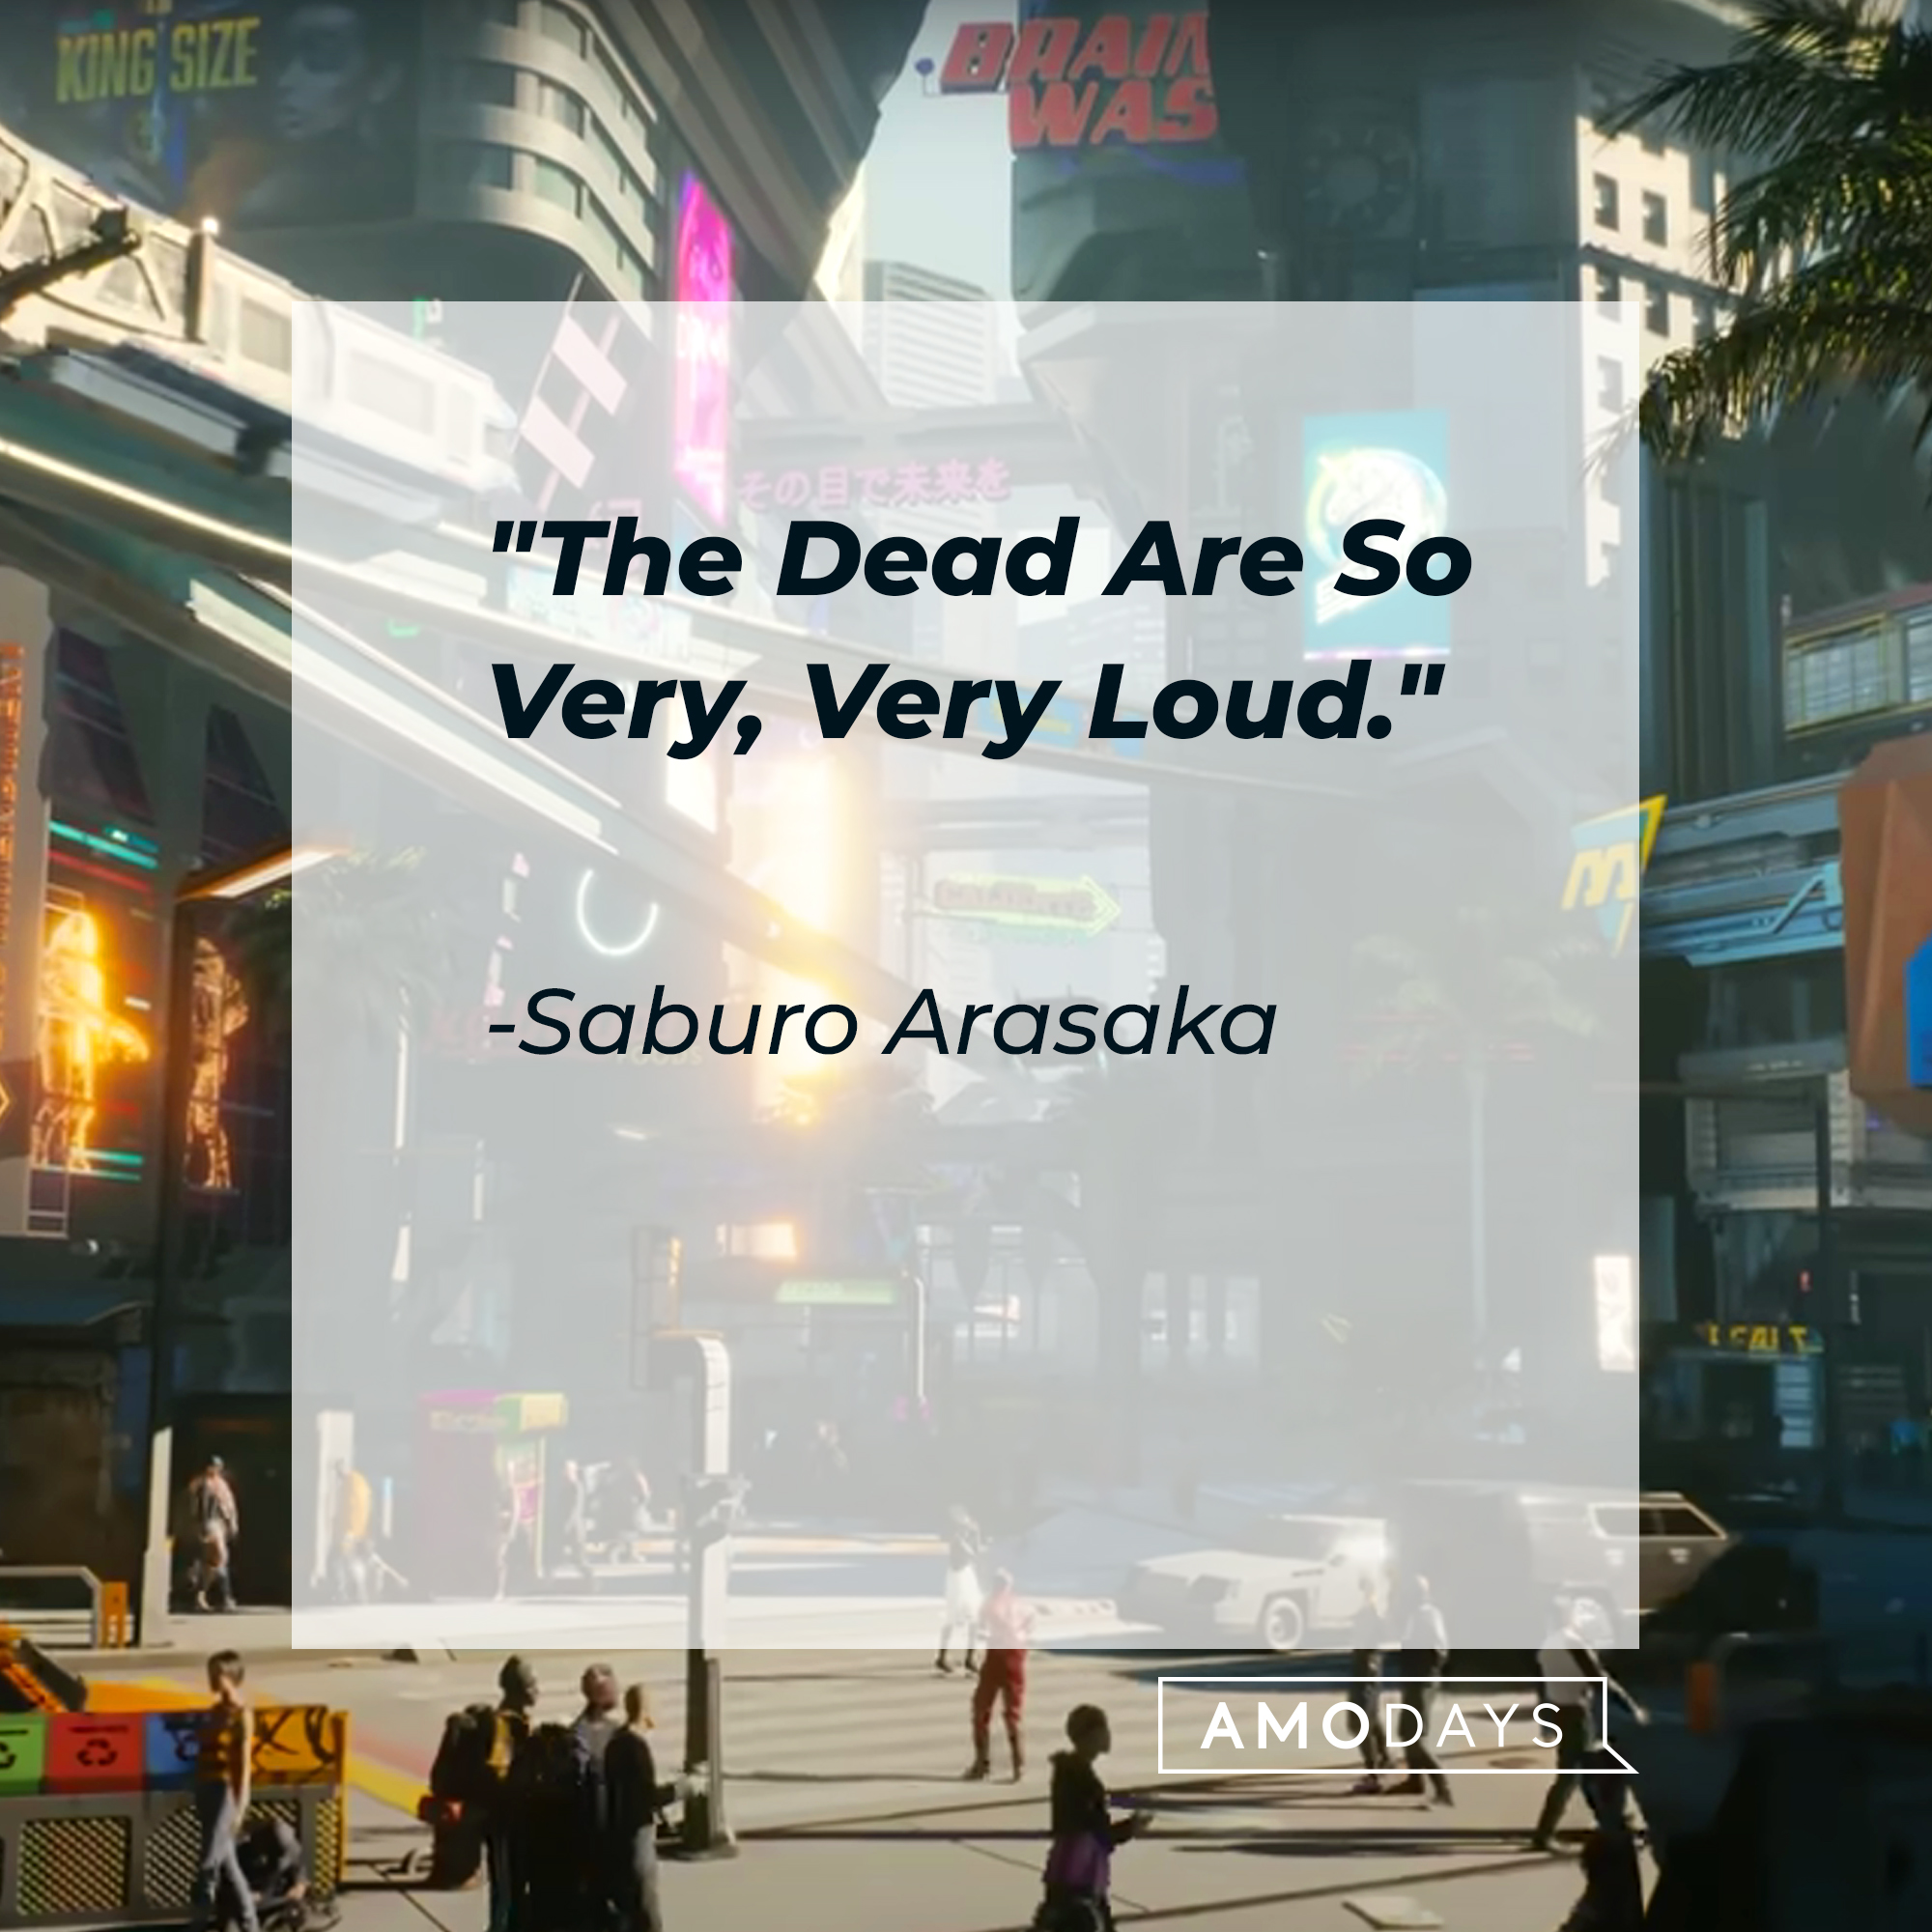 Saburo Arasaka's quote: "The Dead Are So Very, Very Loud." | Source: youtube.com/CyberpunkGame